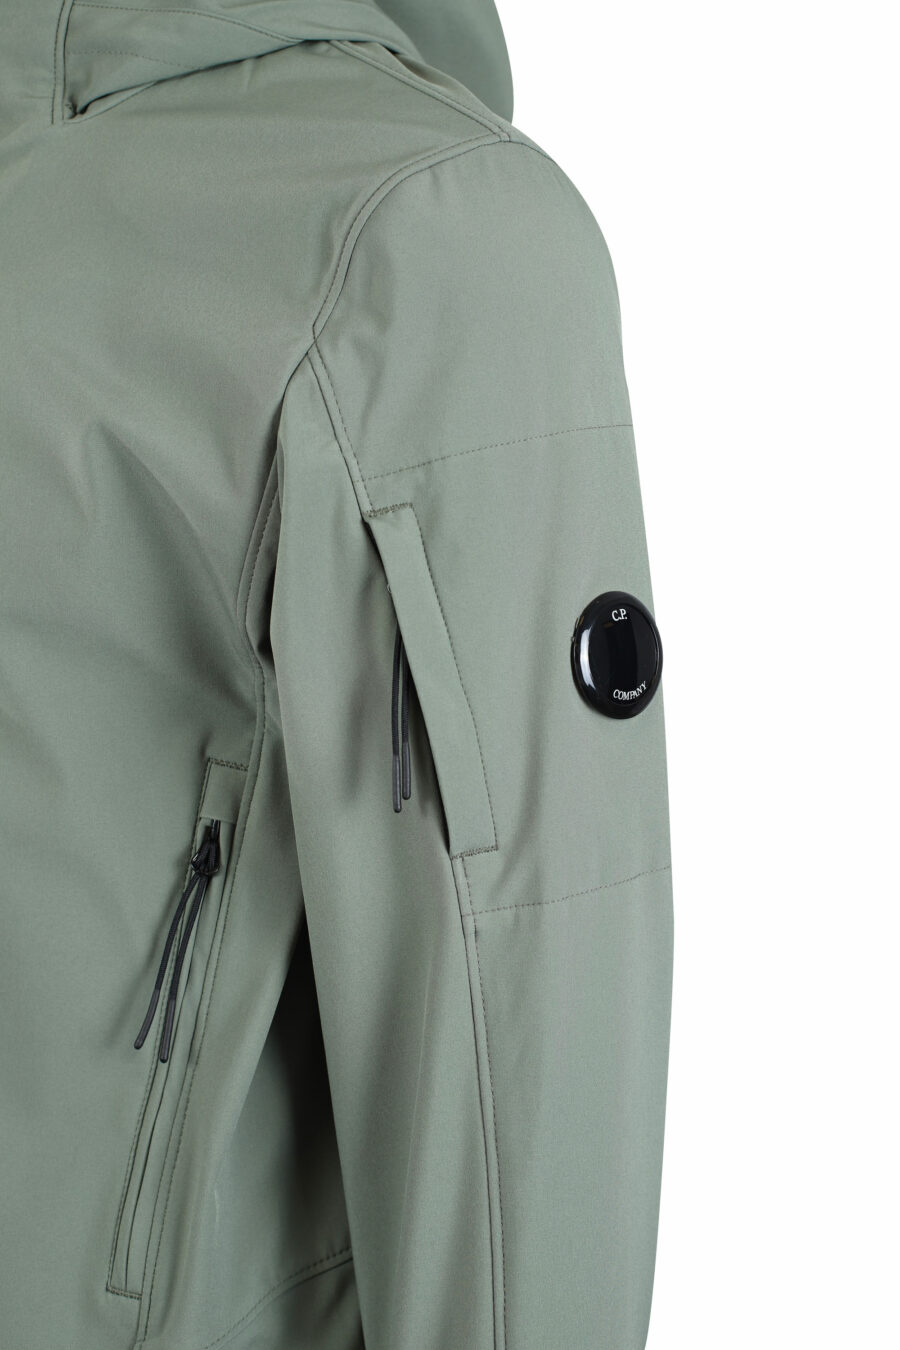 Chaqueta verde militar con capucha y bolsillo lateral con minilogo circular - IMG 2687